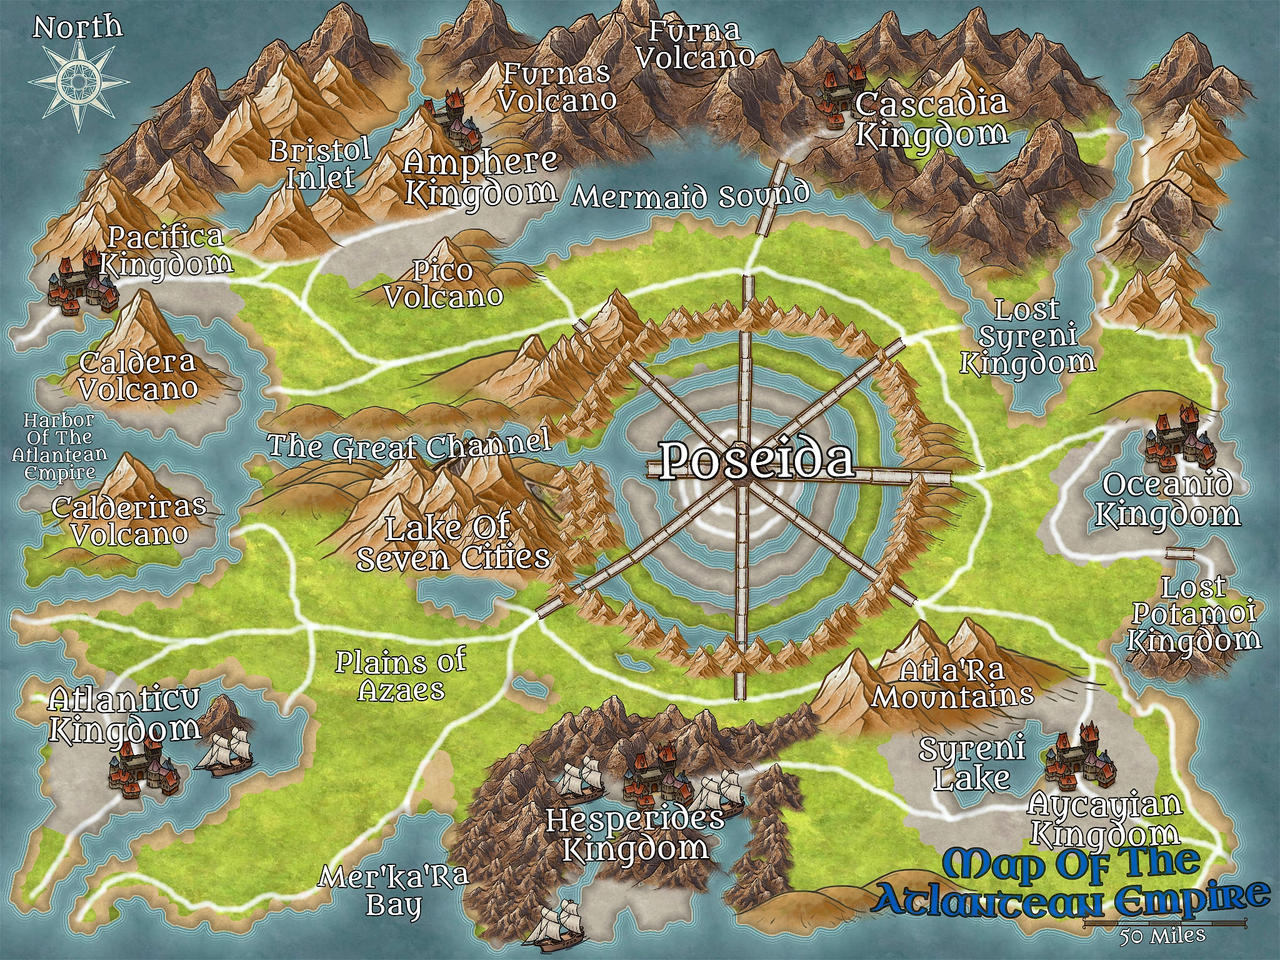 Islands Of Adventure Map by blunose2772 on DeviantArt